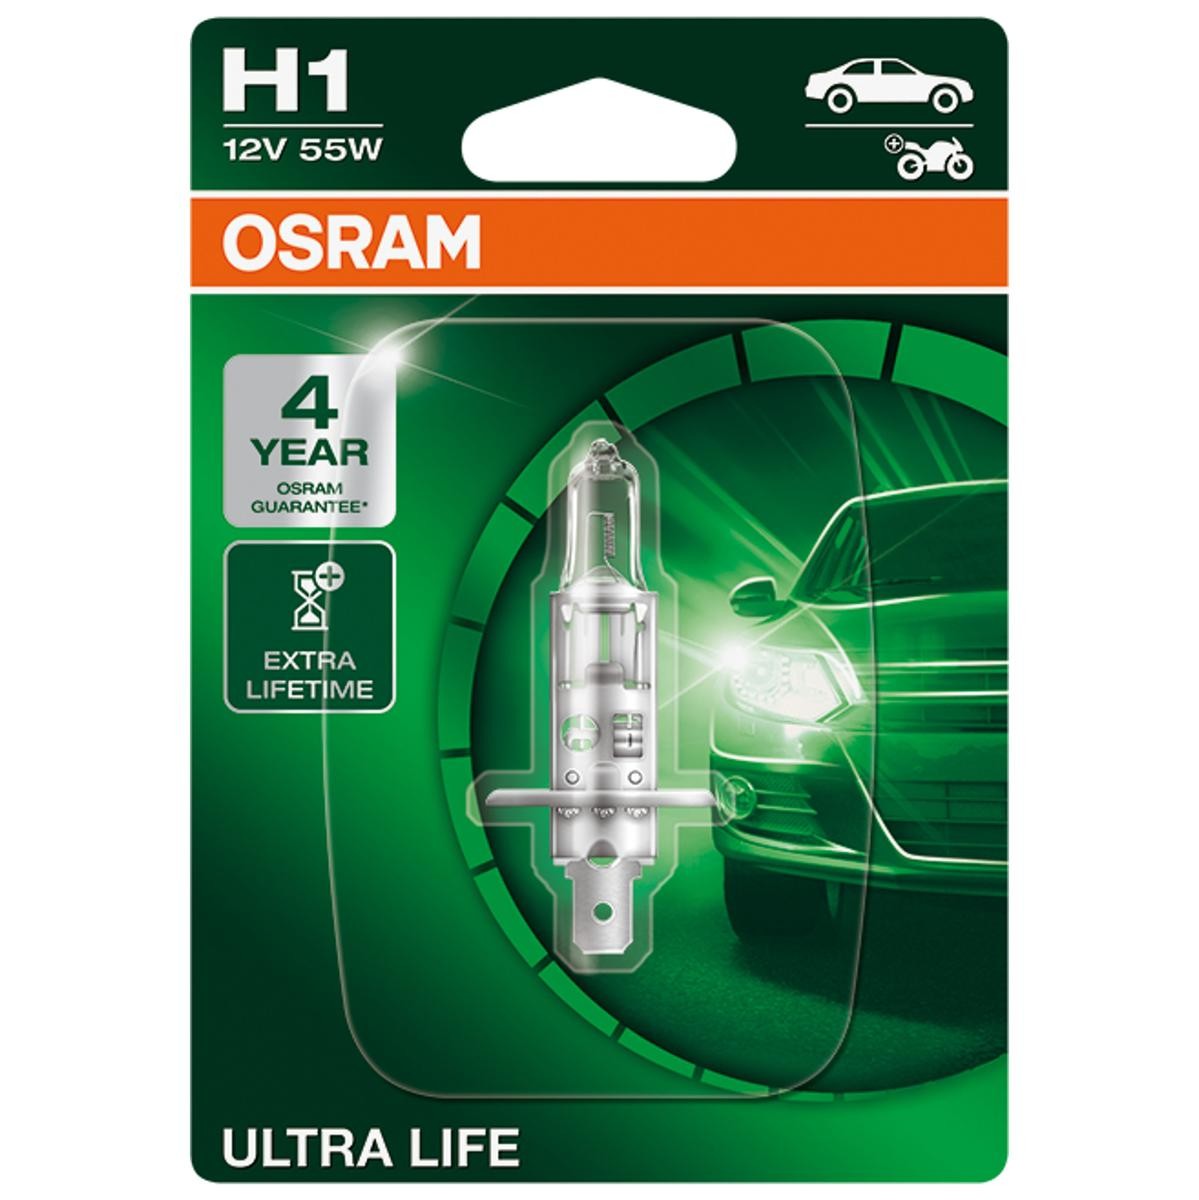 64150ULT-01B OSRAM ULTRA LIFE H1 12V 55W 3200K Halogen Glühlampe,  Fernscheinwerfer